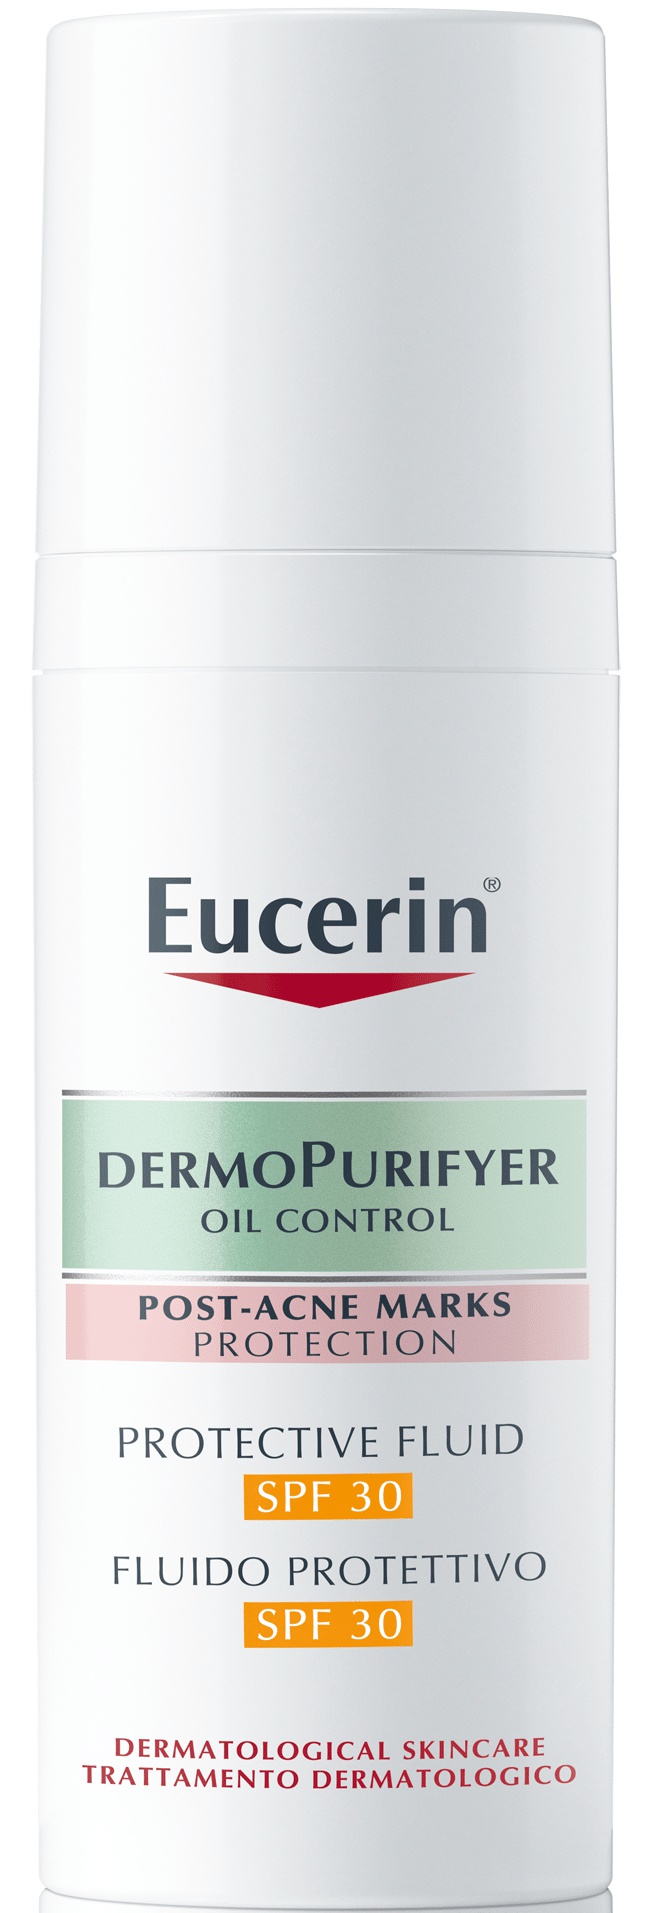 Eucerin Dermopurifyer Protective Fluid SPF 30